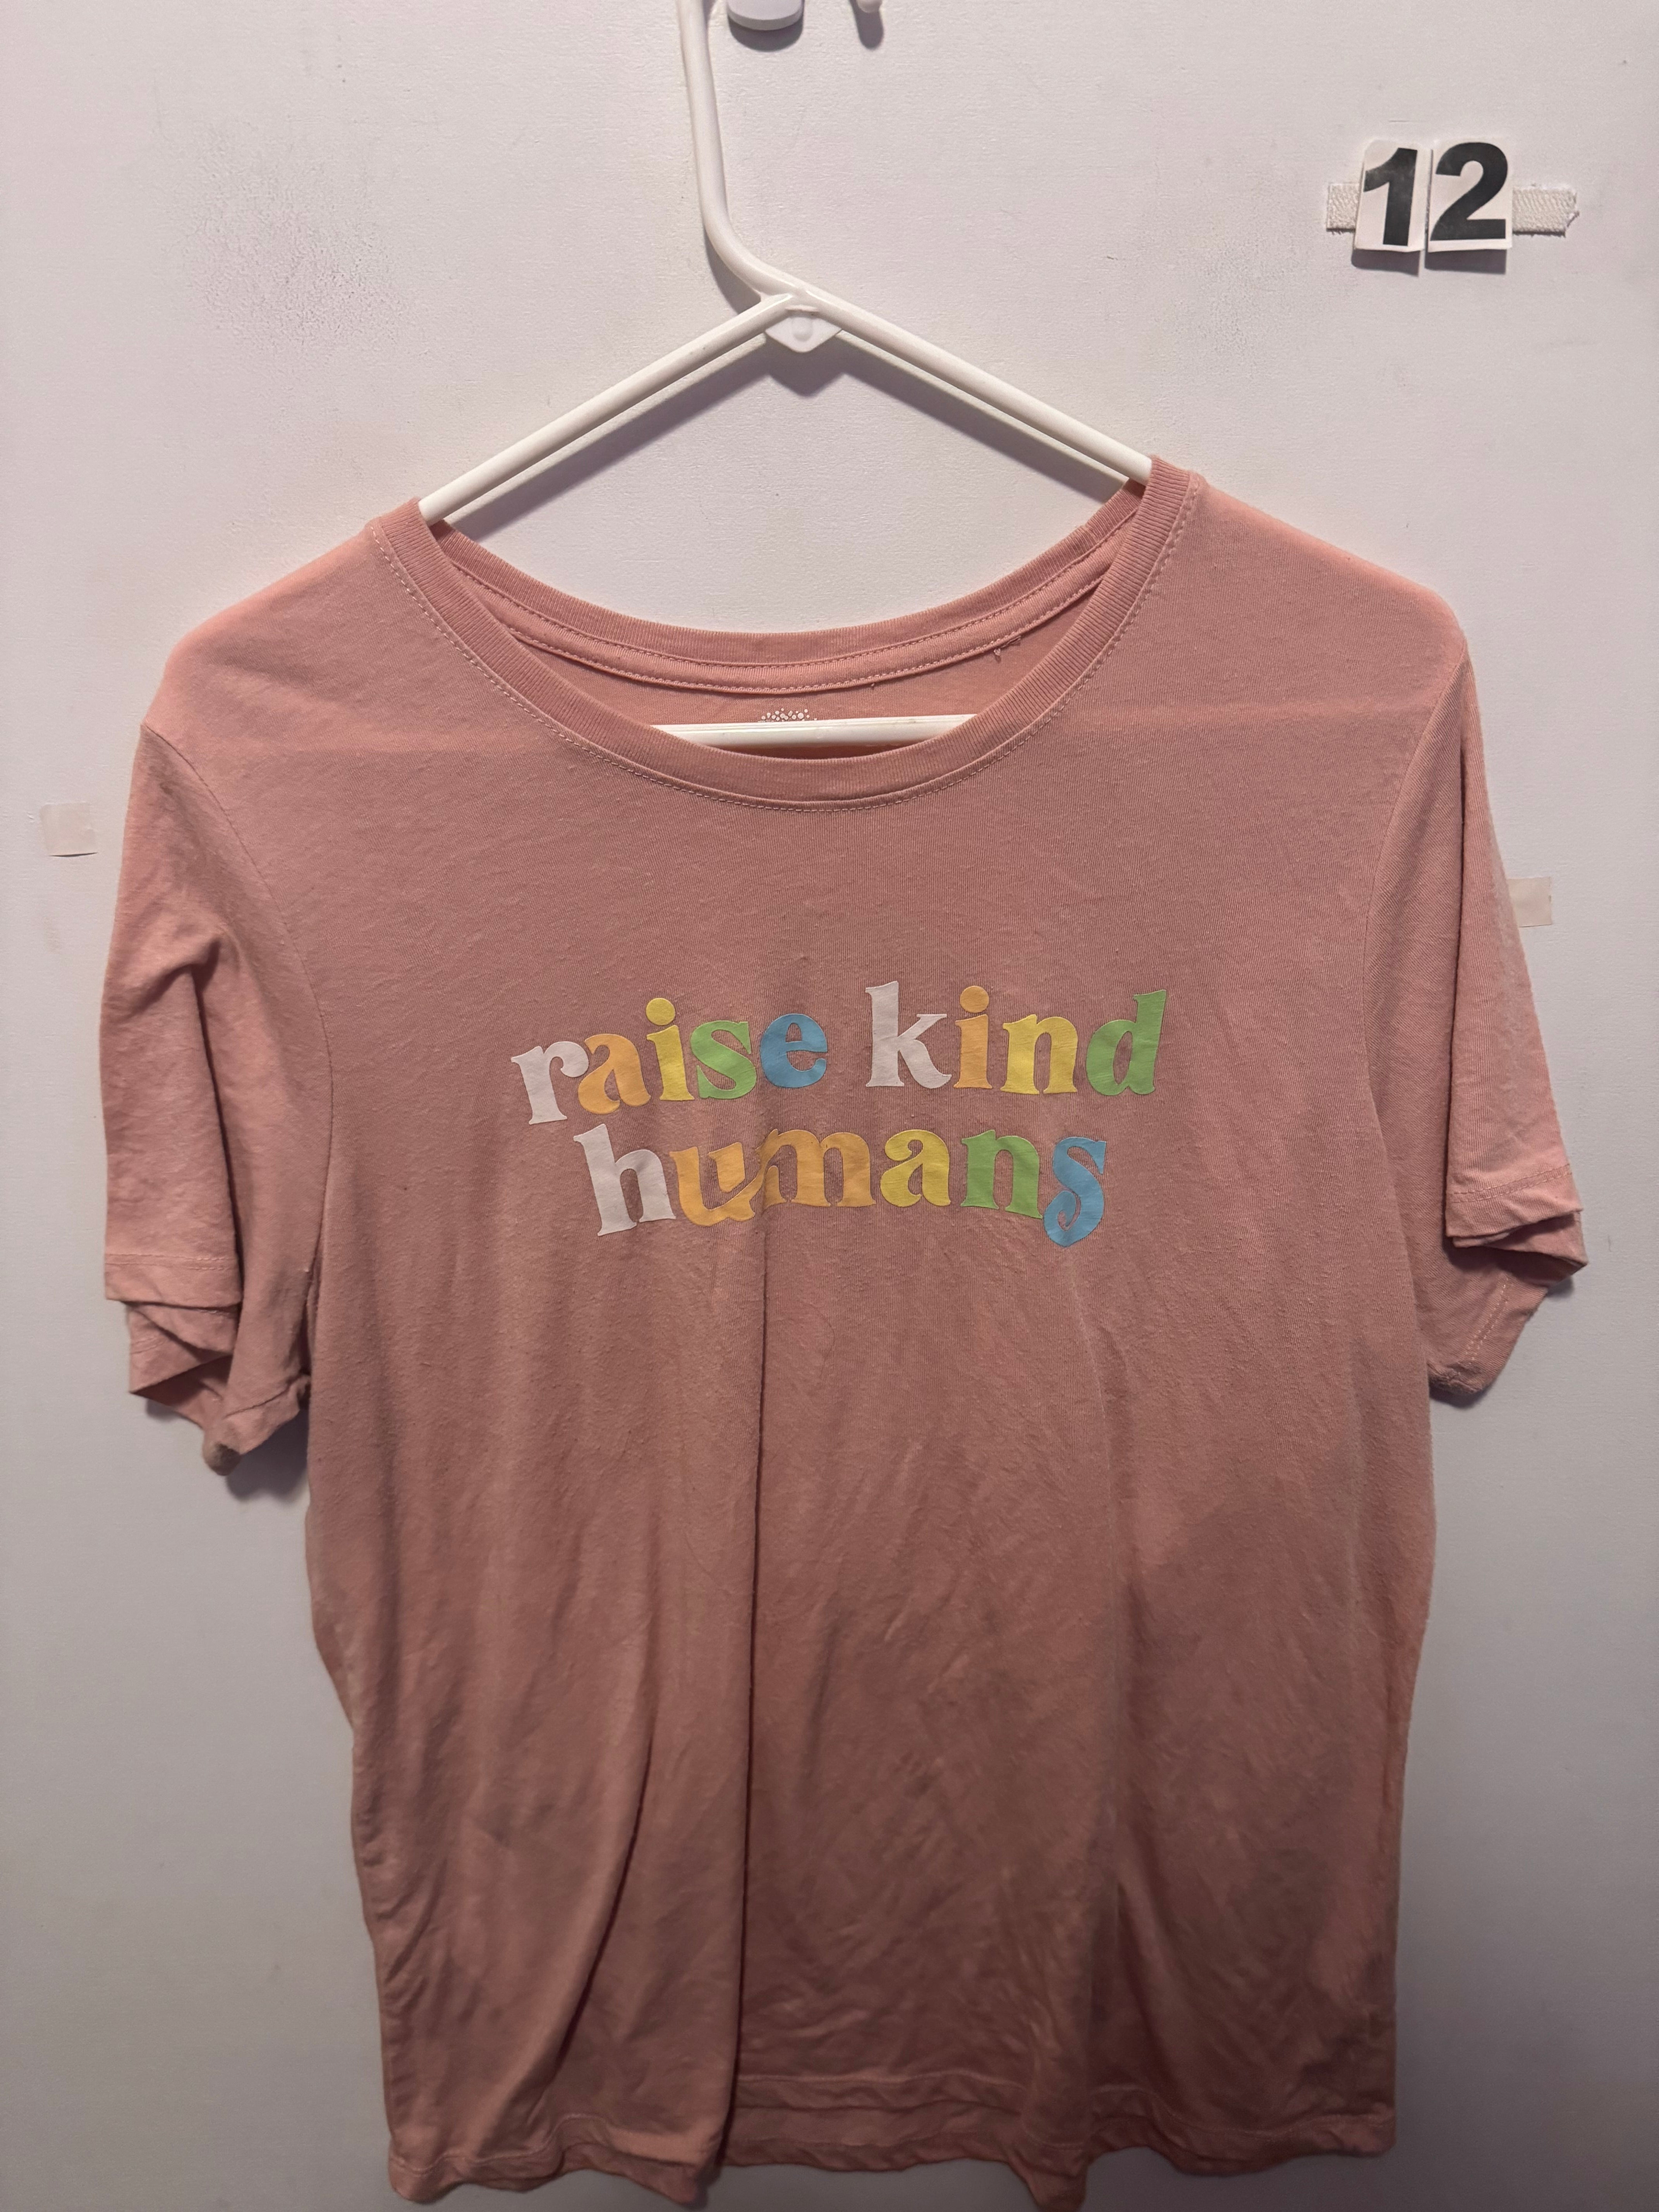 Women’s XL Pride Shirt